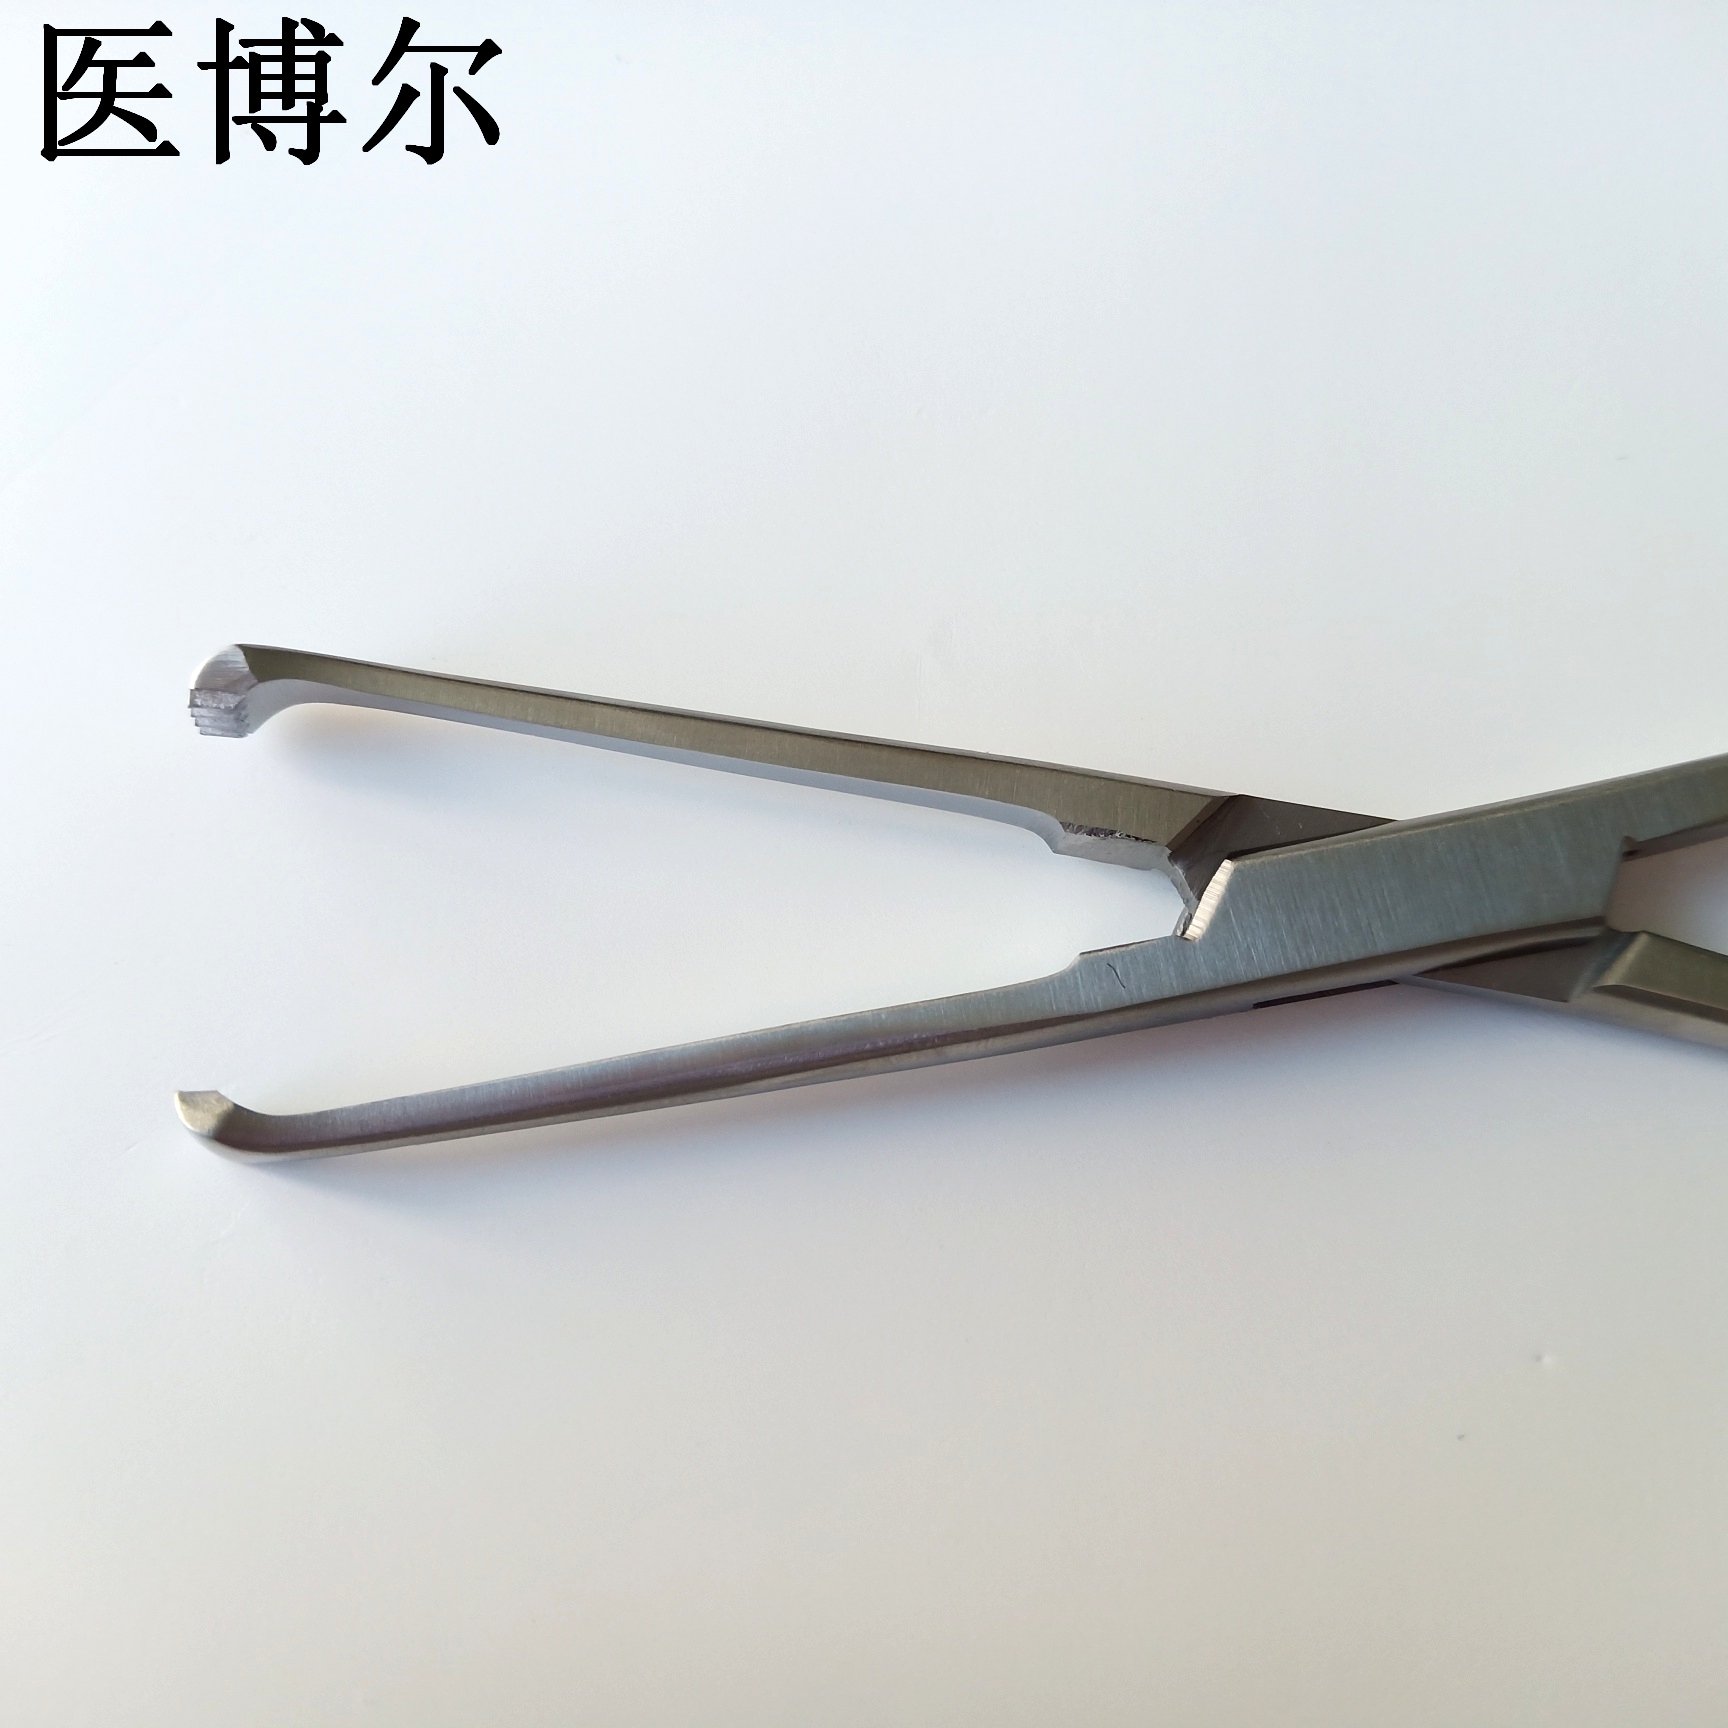 16cm组织钳 (6)_看图王.jpg